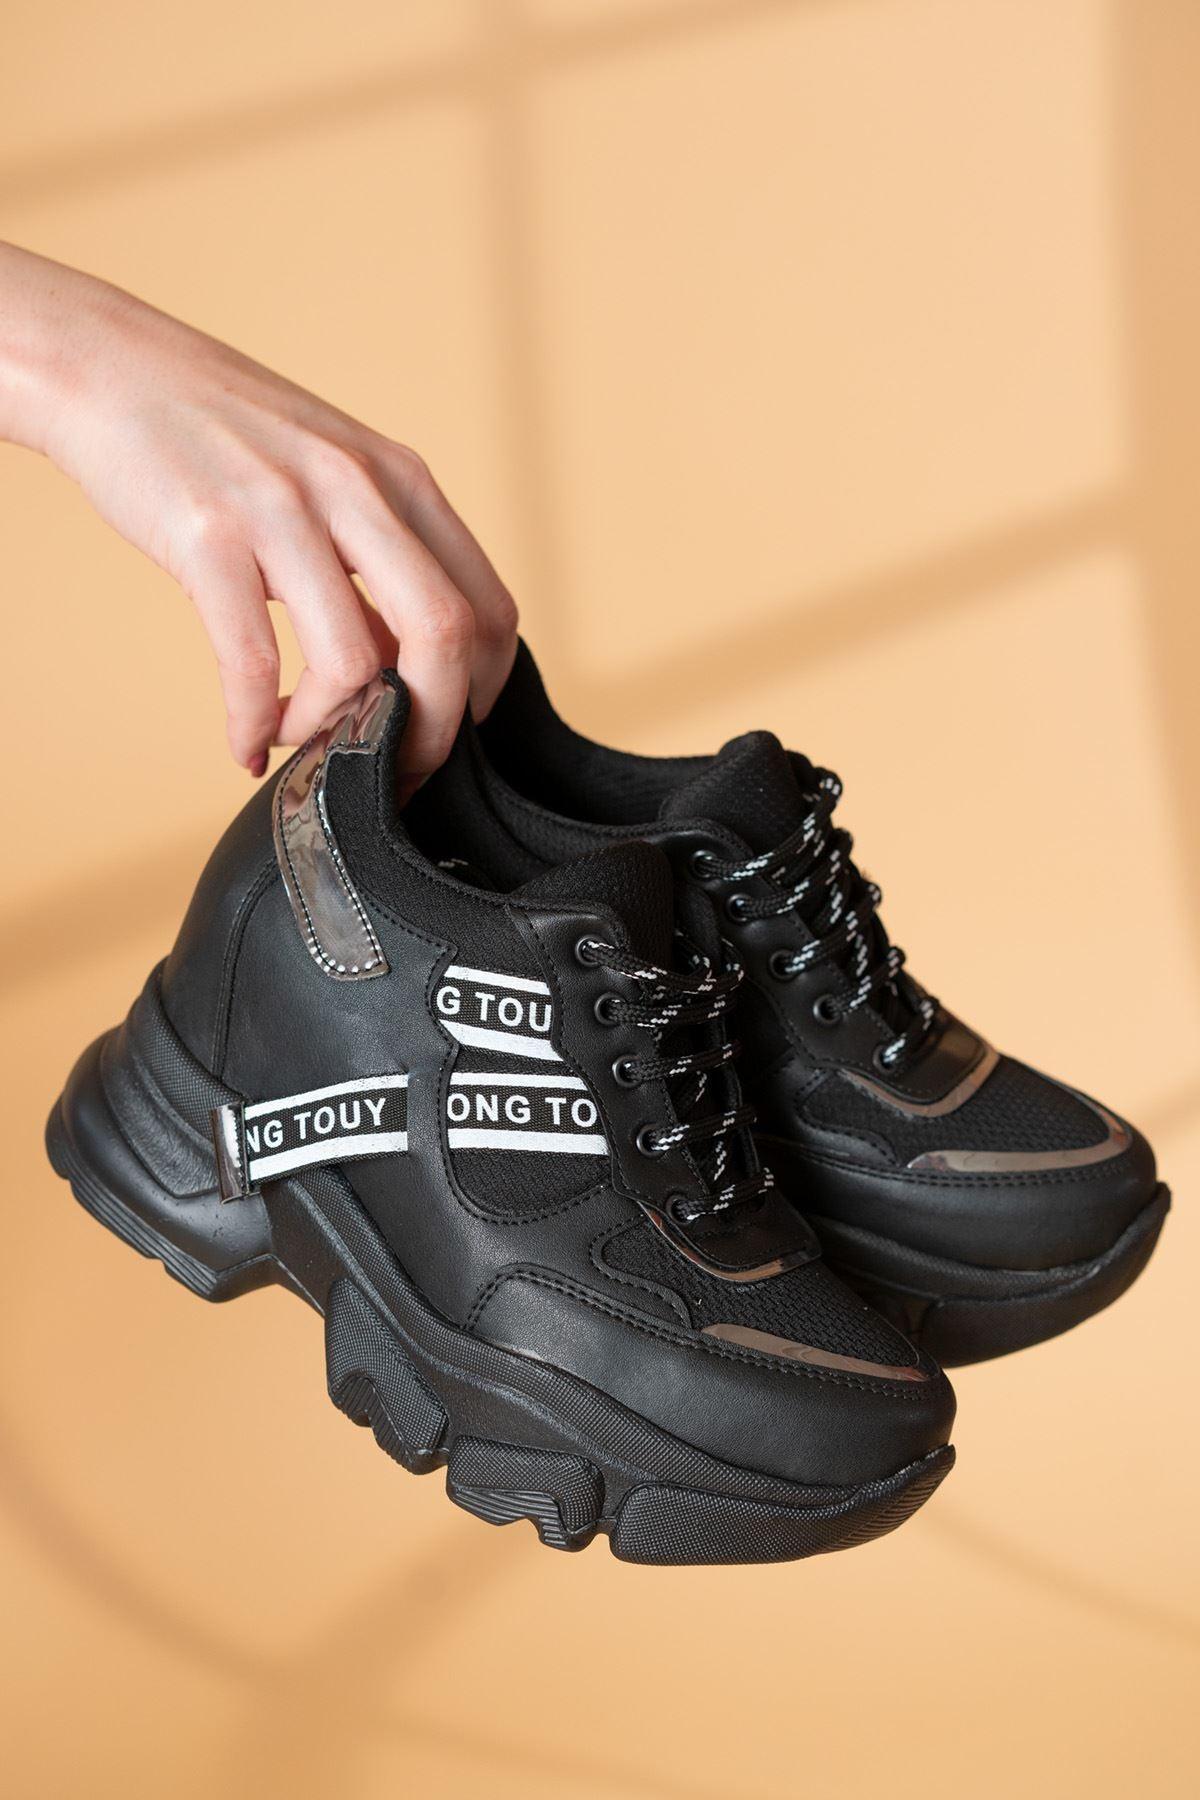 Tonega Women's Black Matte Leather Sneakers shoes - STREET MODE ™